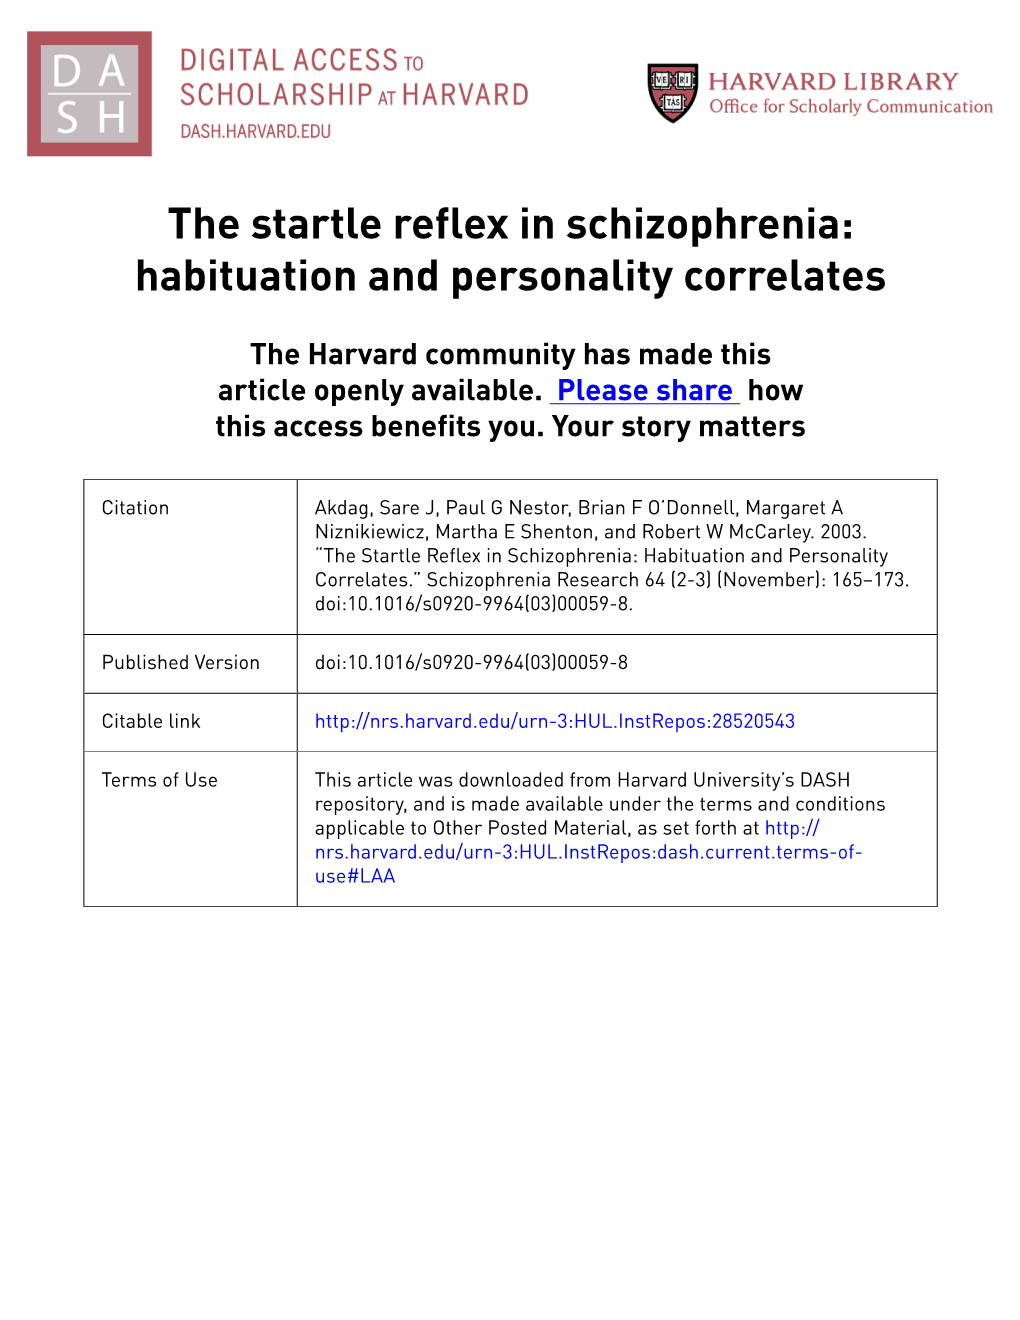 The Startle Reflex in Schizophrenia: Habituation and Personality Correlates